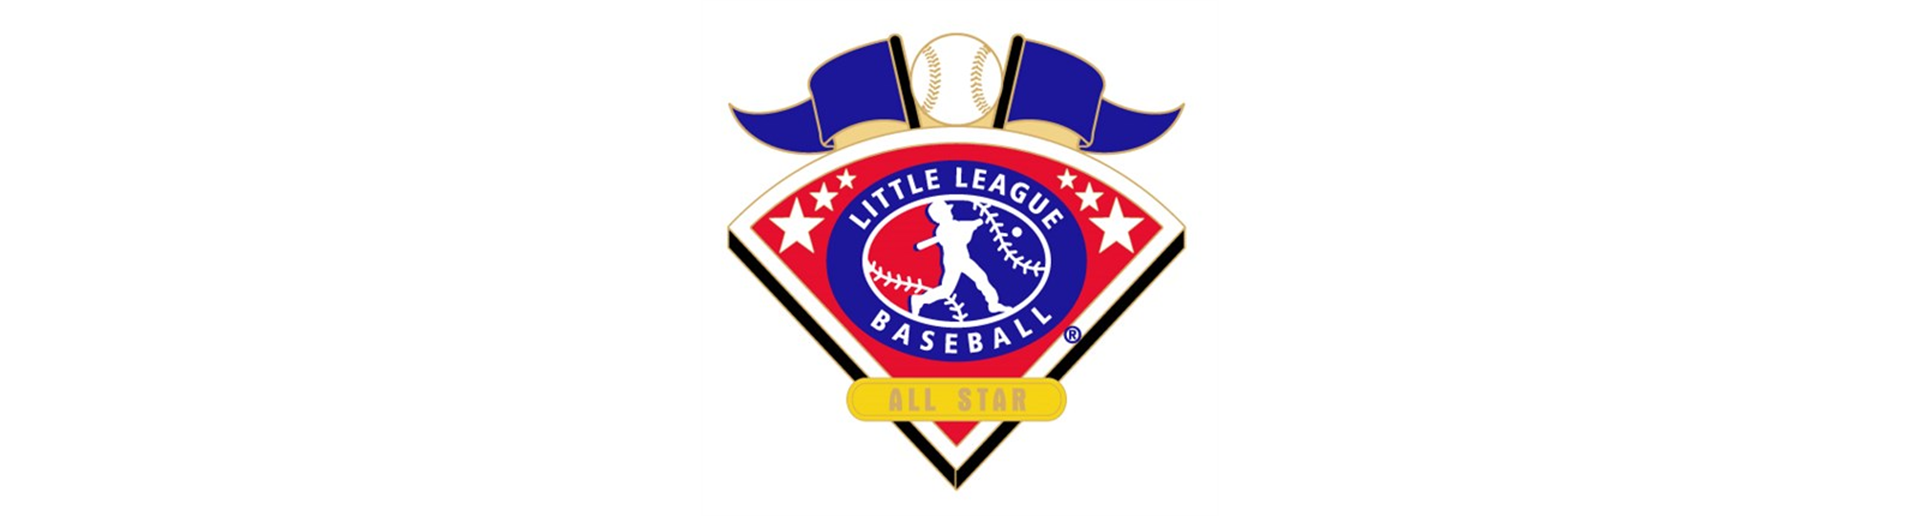 2022 All Star Team Rosters & Info - Baseball & Softball 